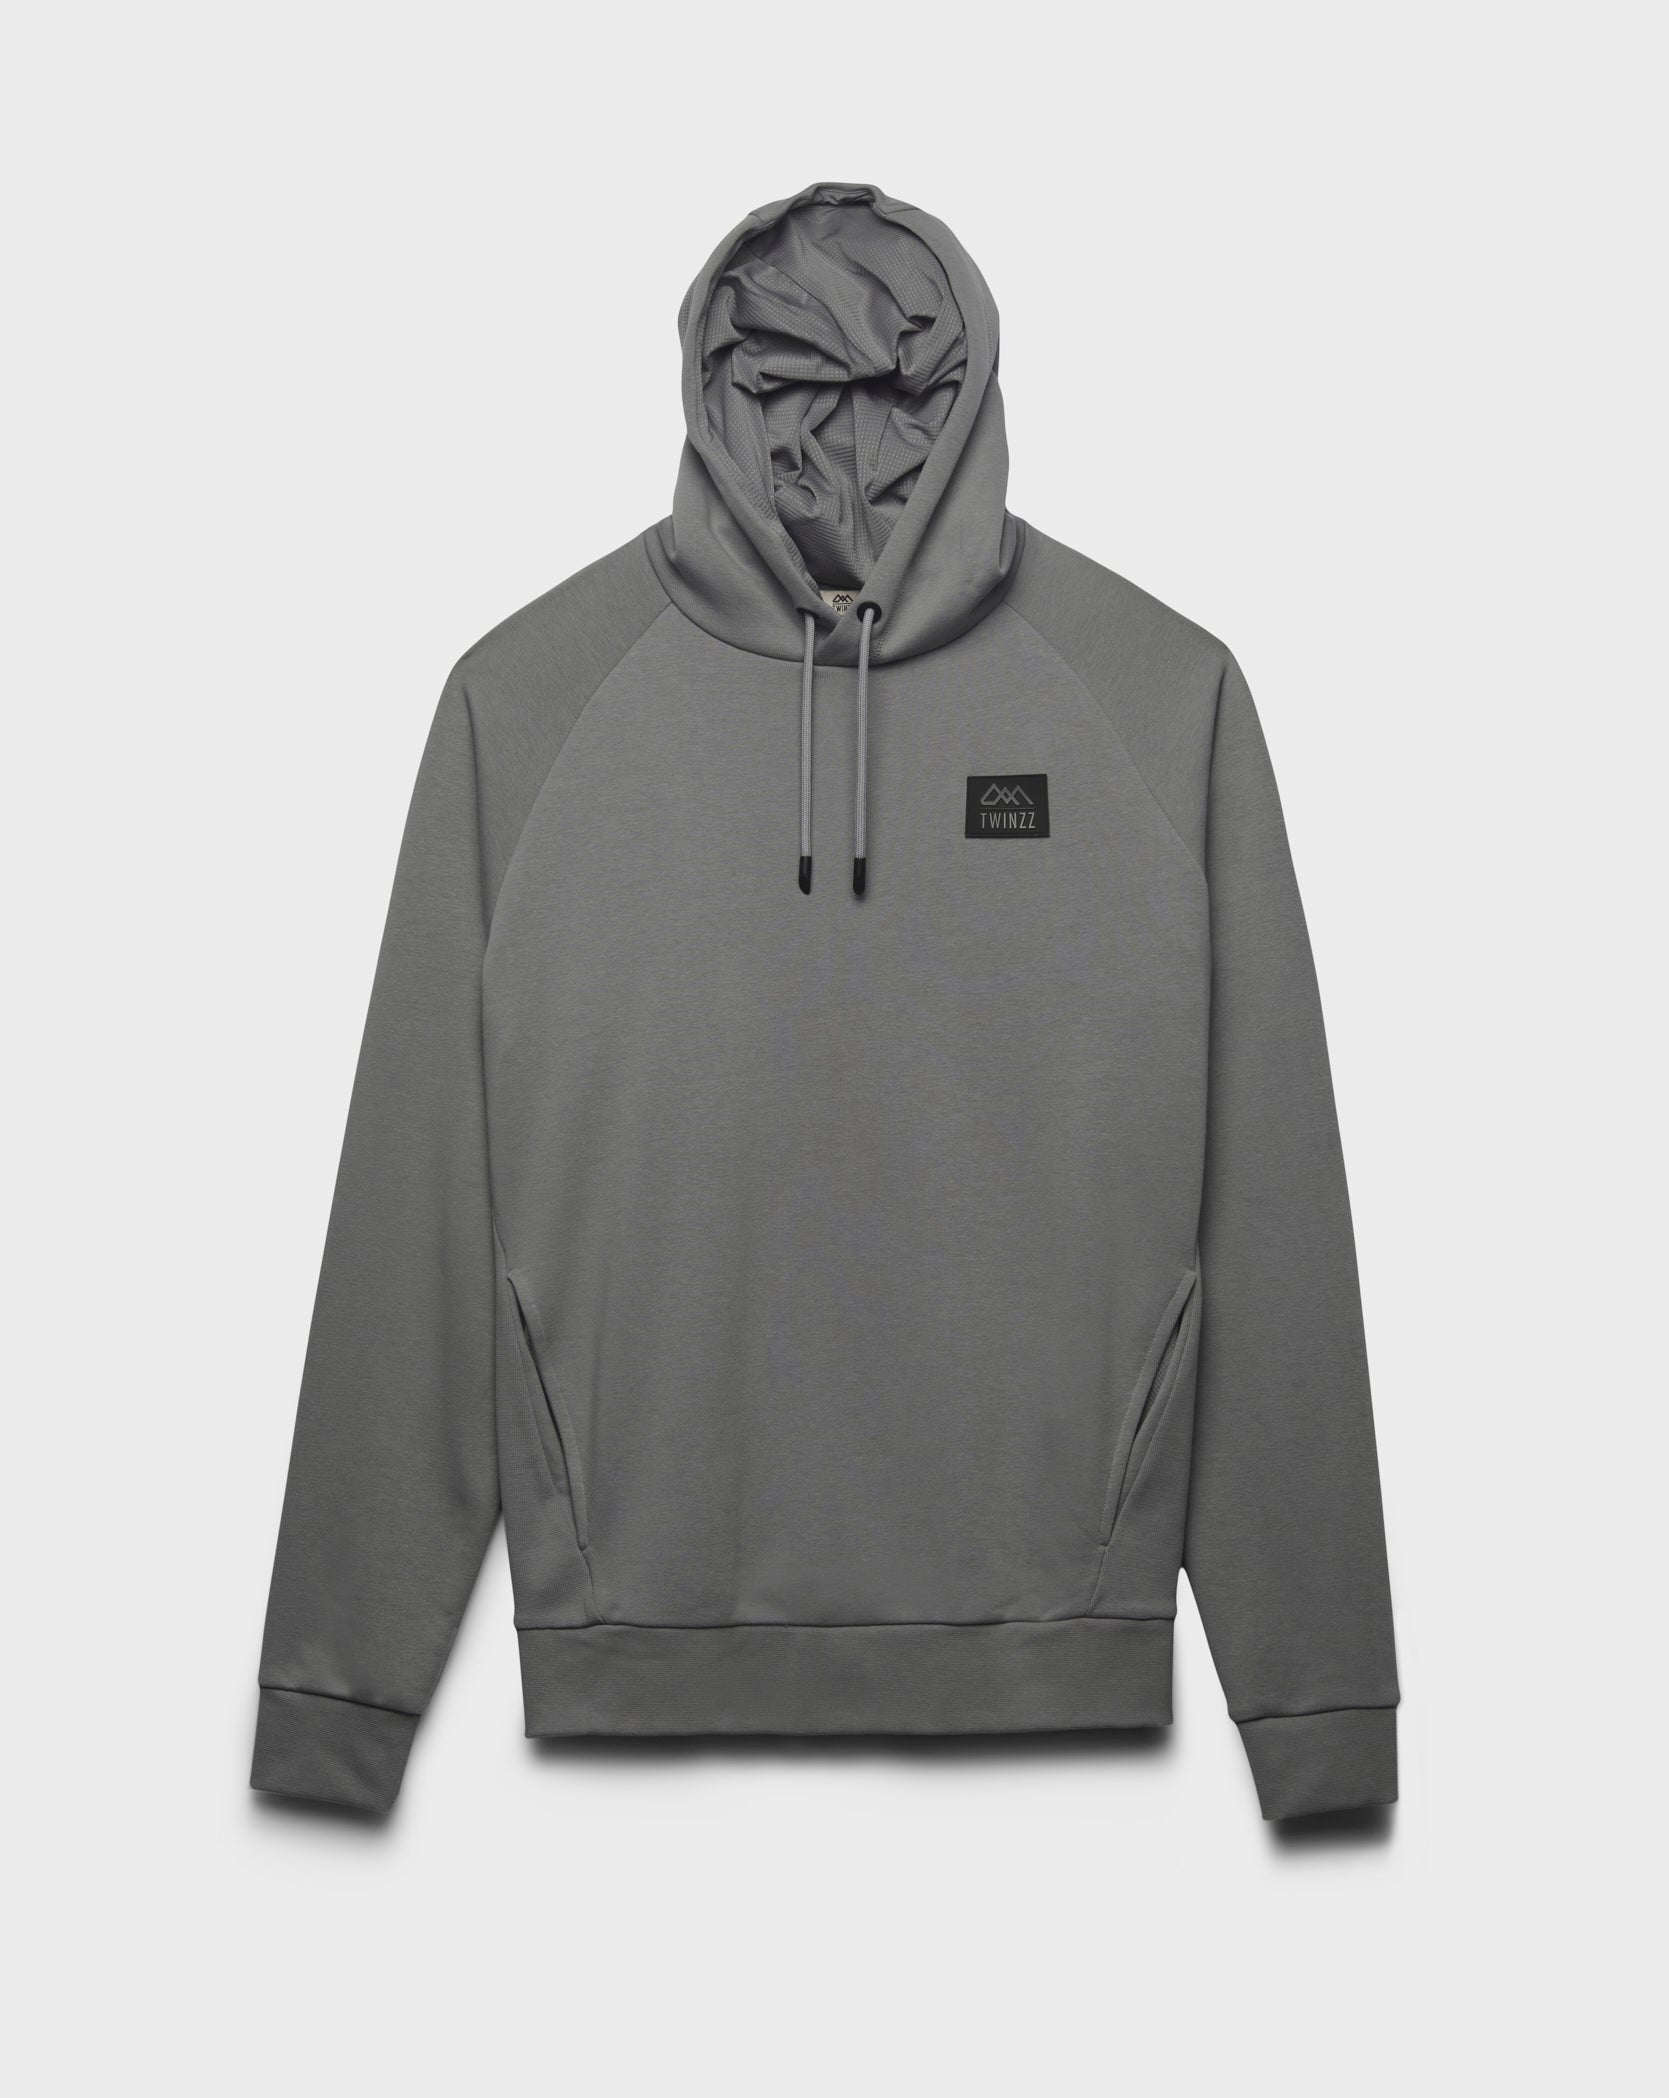 Twinzz grey lifestyle hoodie